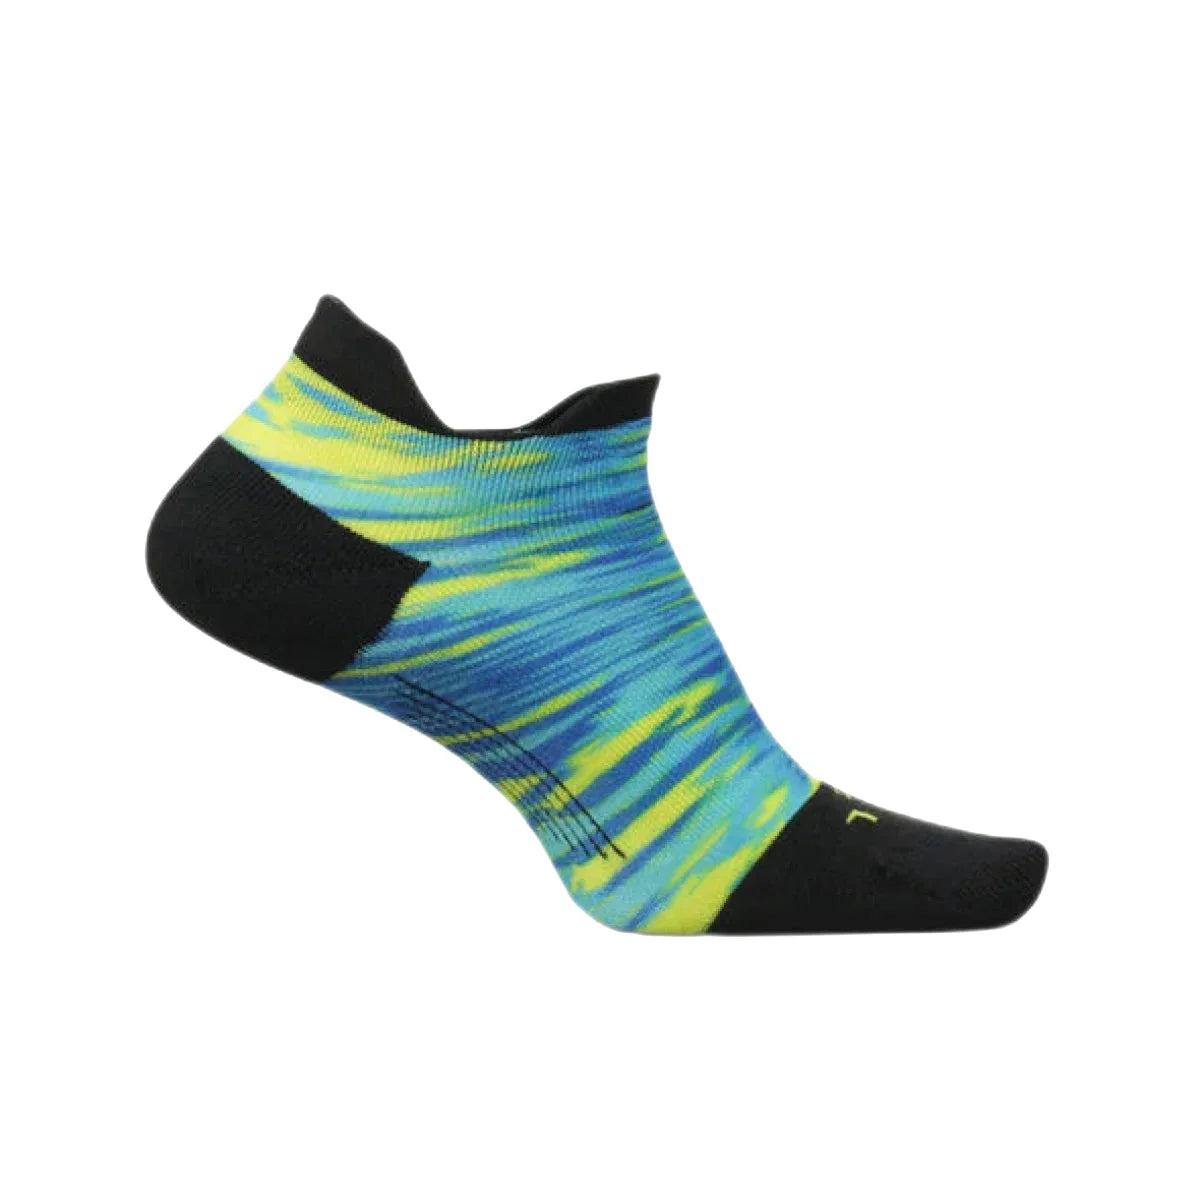 Unisex Feetures Elite Light Cushion No-Show Socks